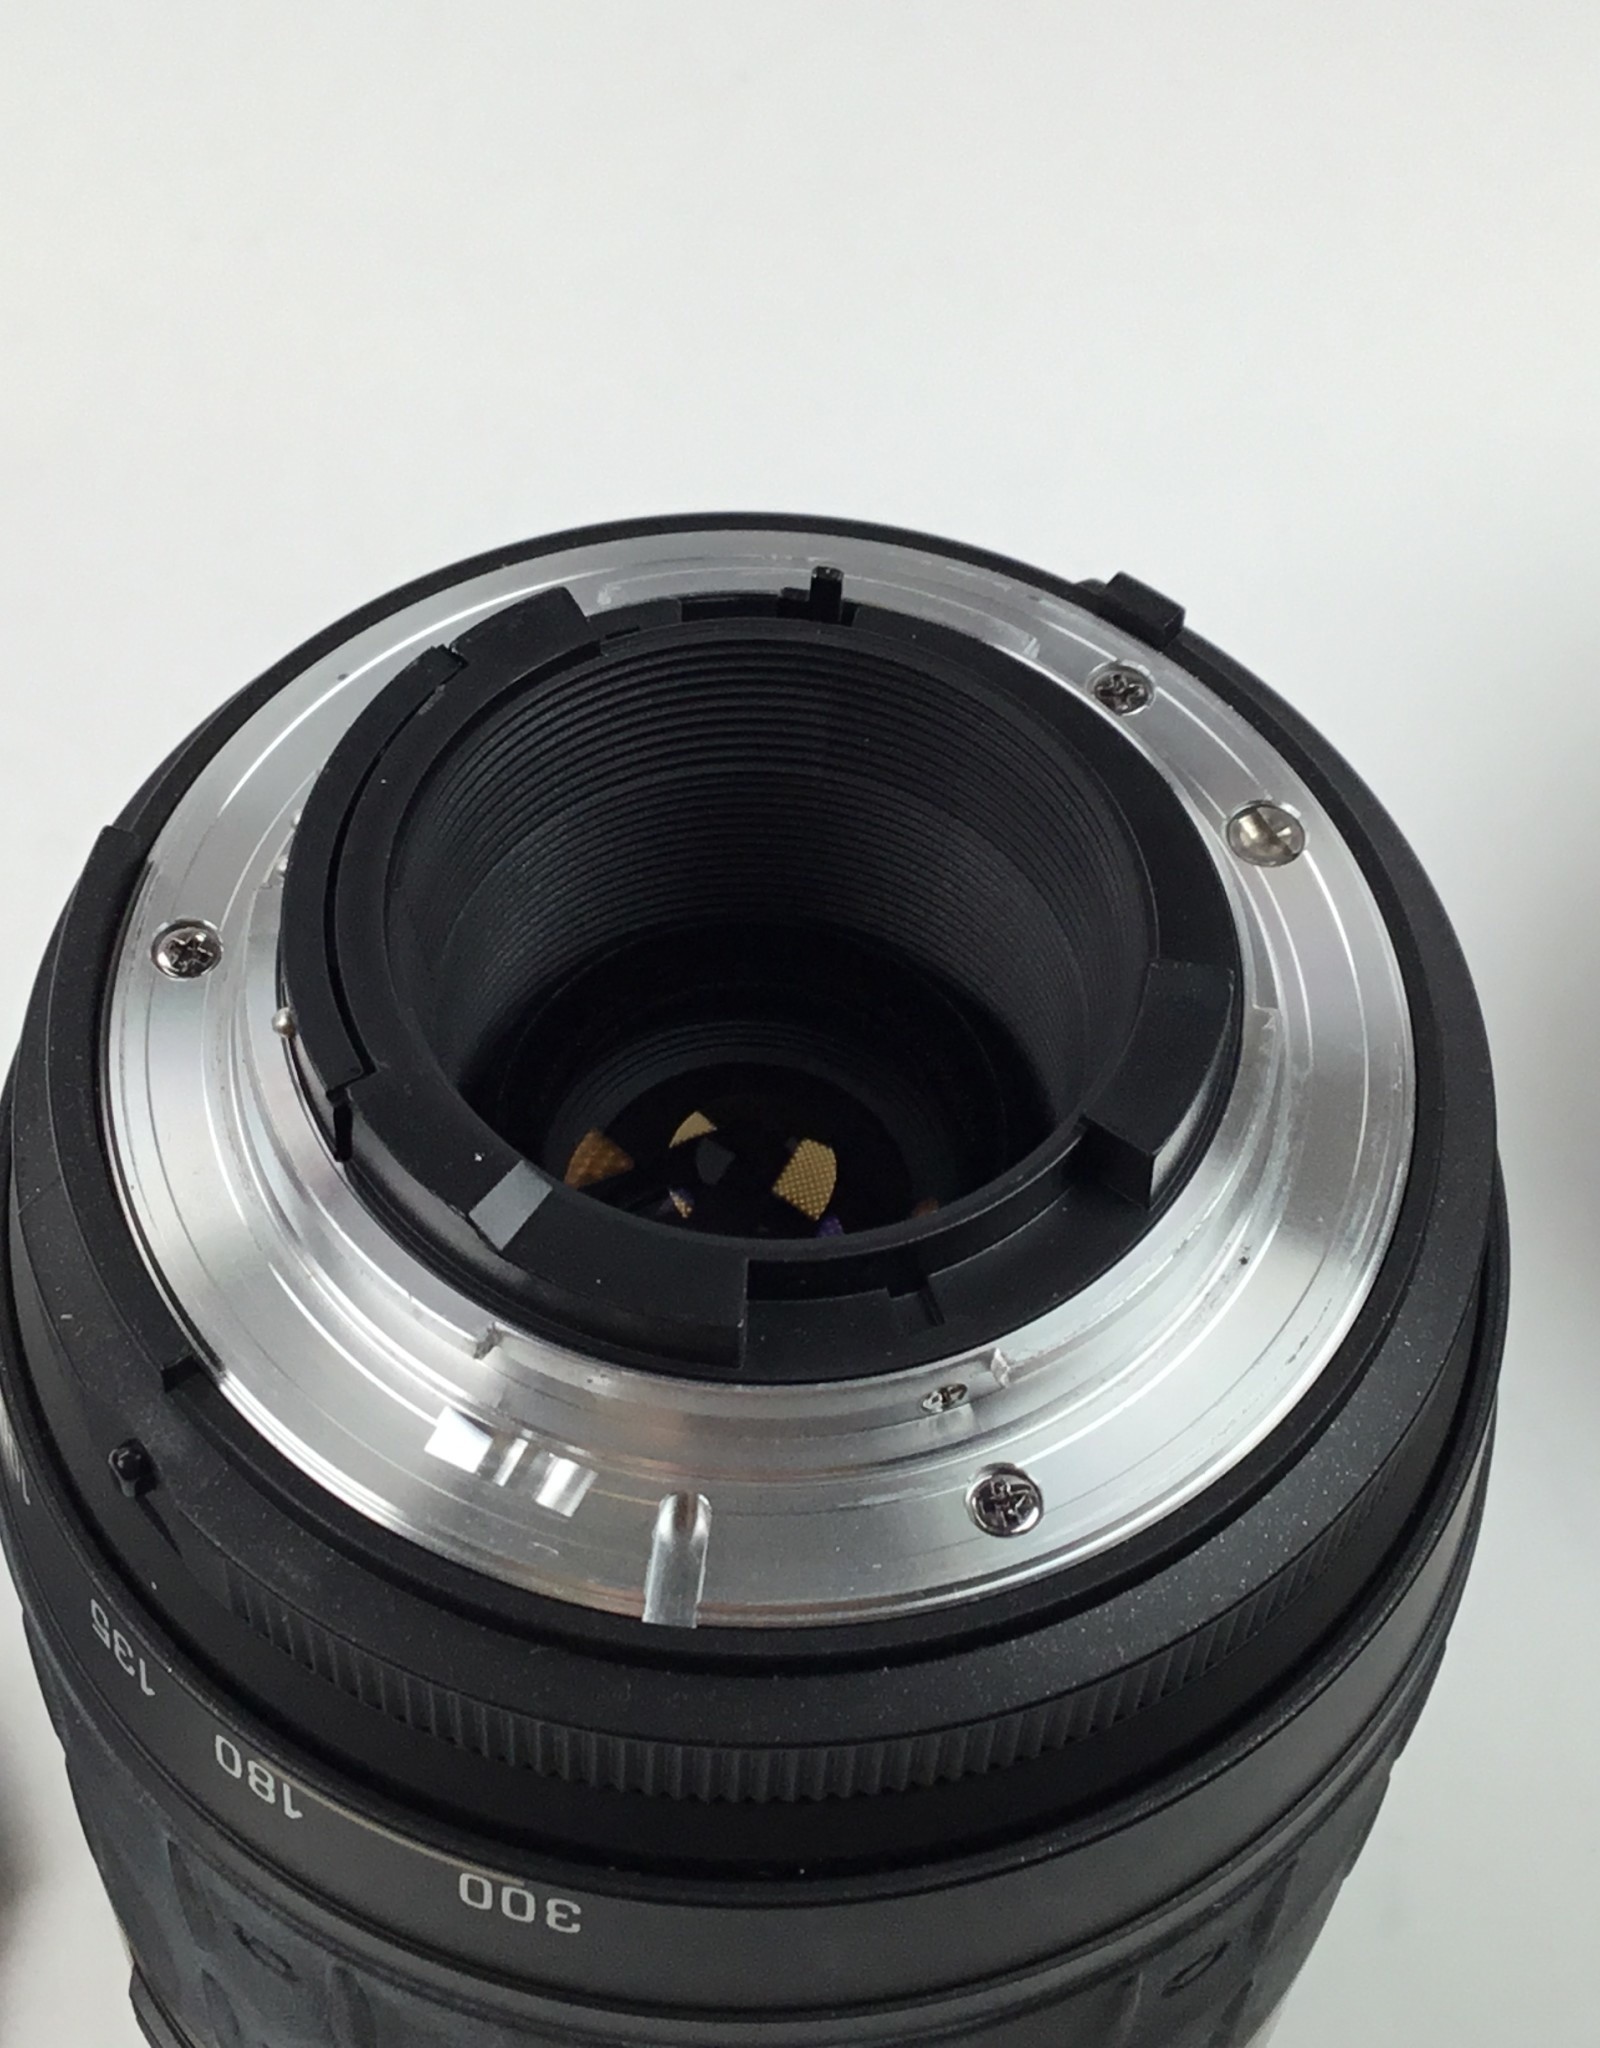 Quantaray AF 70-300mm f4-5.6 Lens for Nikon Used Good